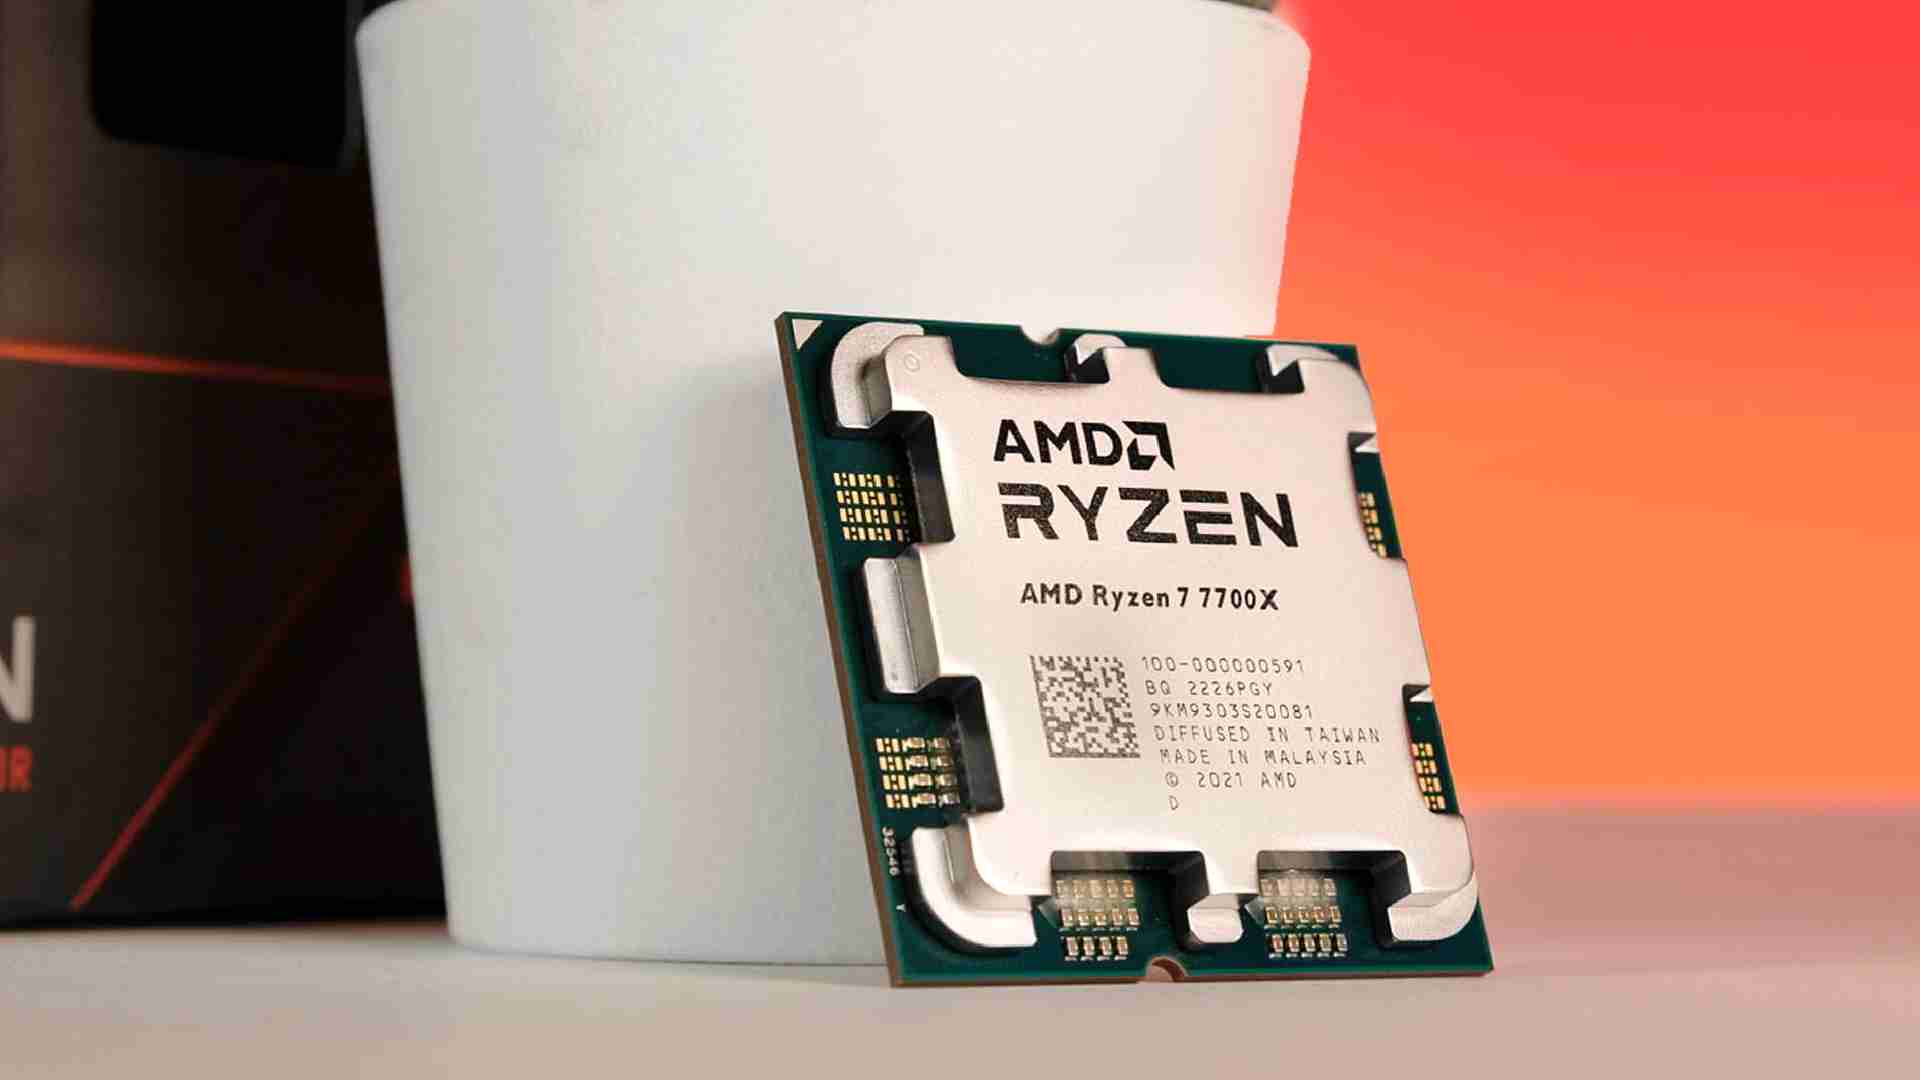 AMD Ryzen 7700X Review